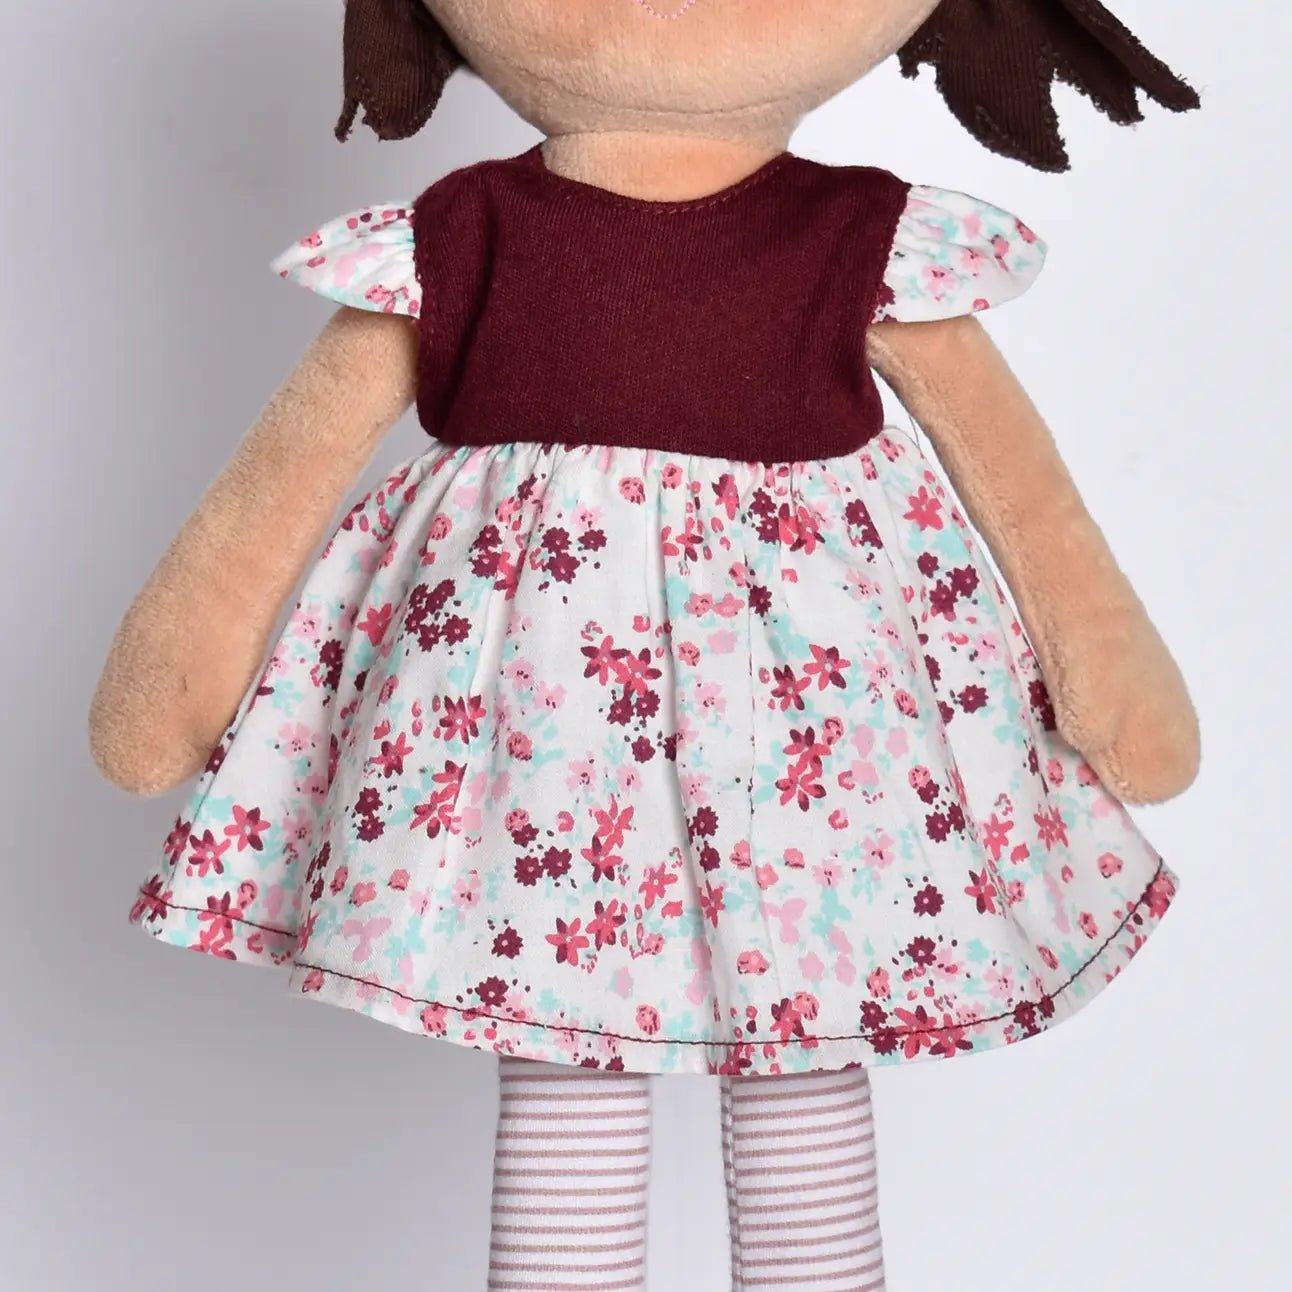 fair trade handmade cloth doll selina 5